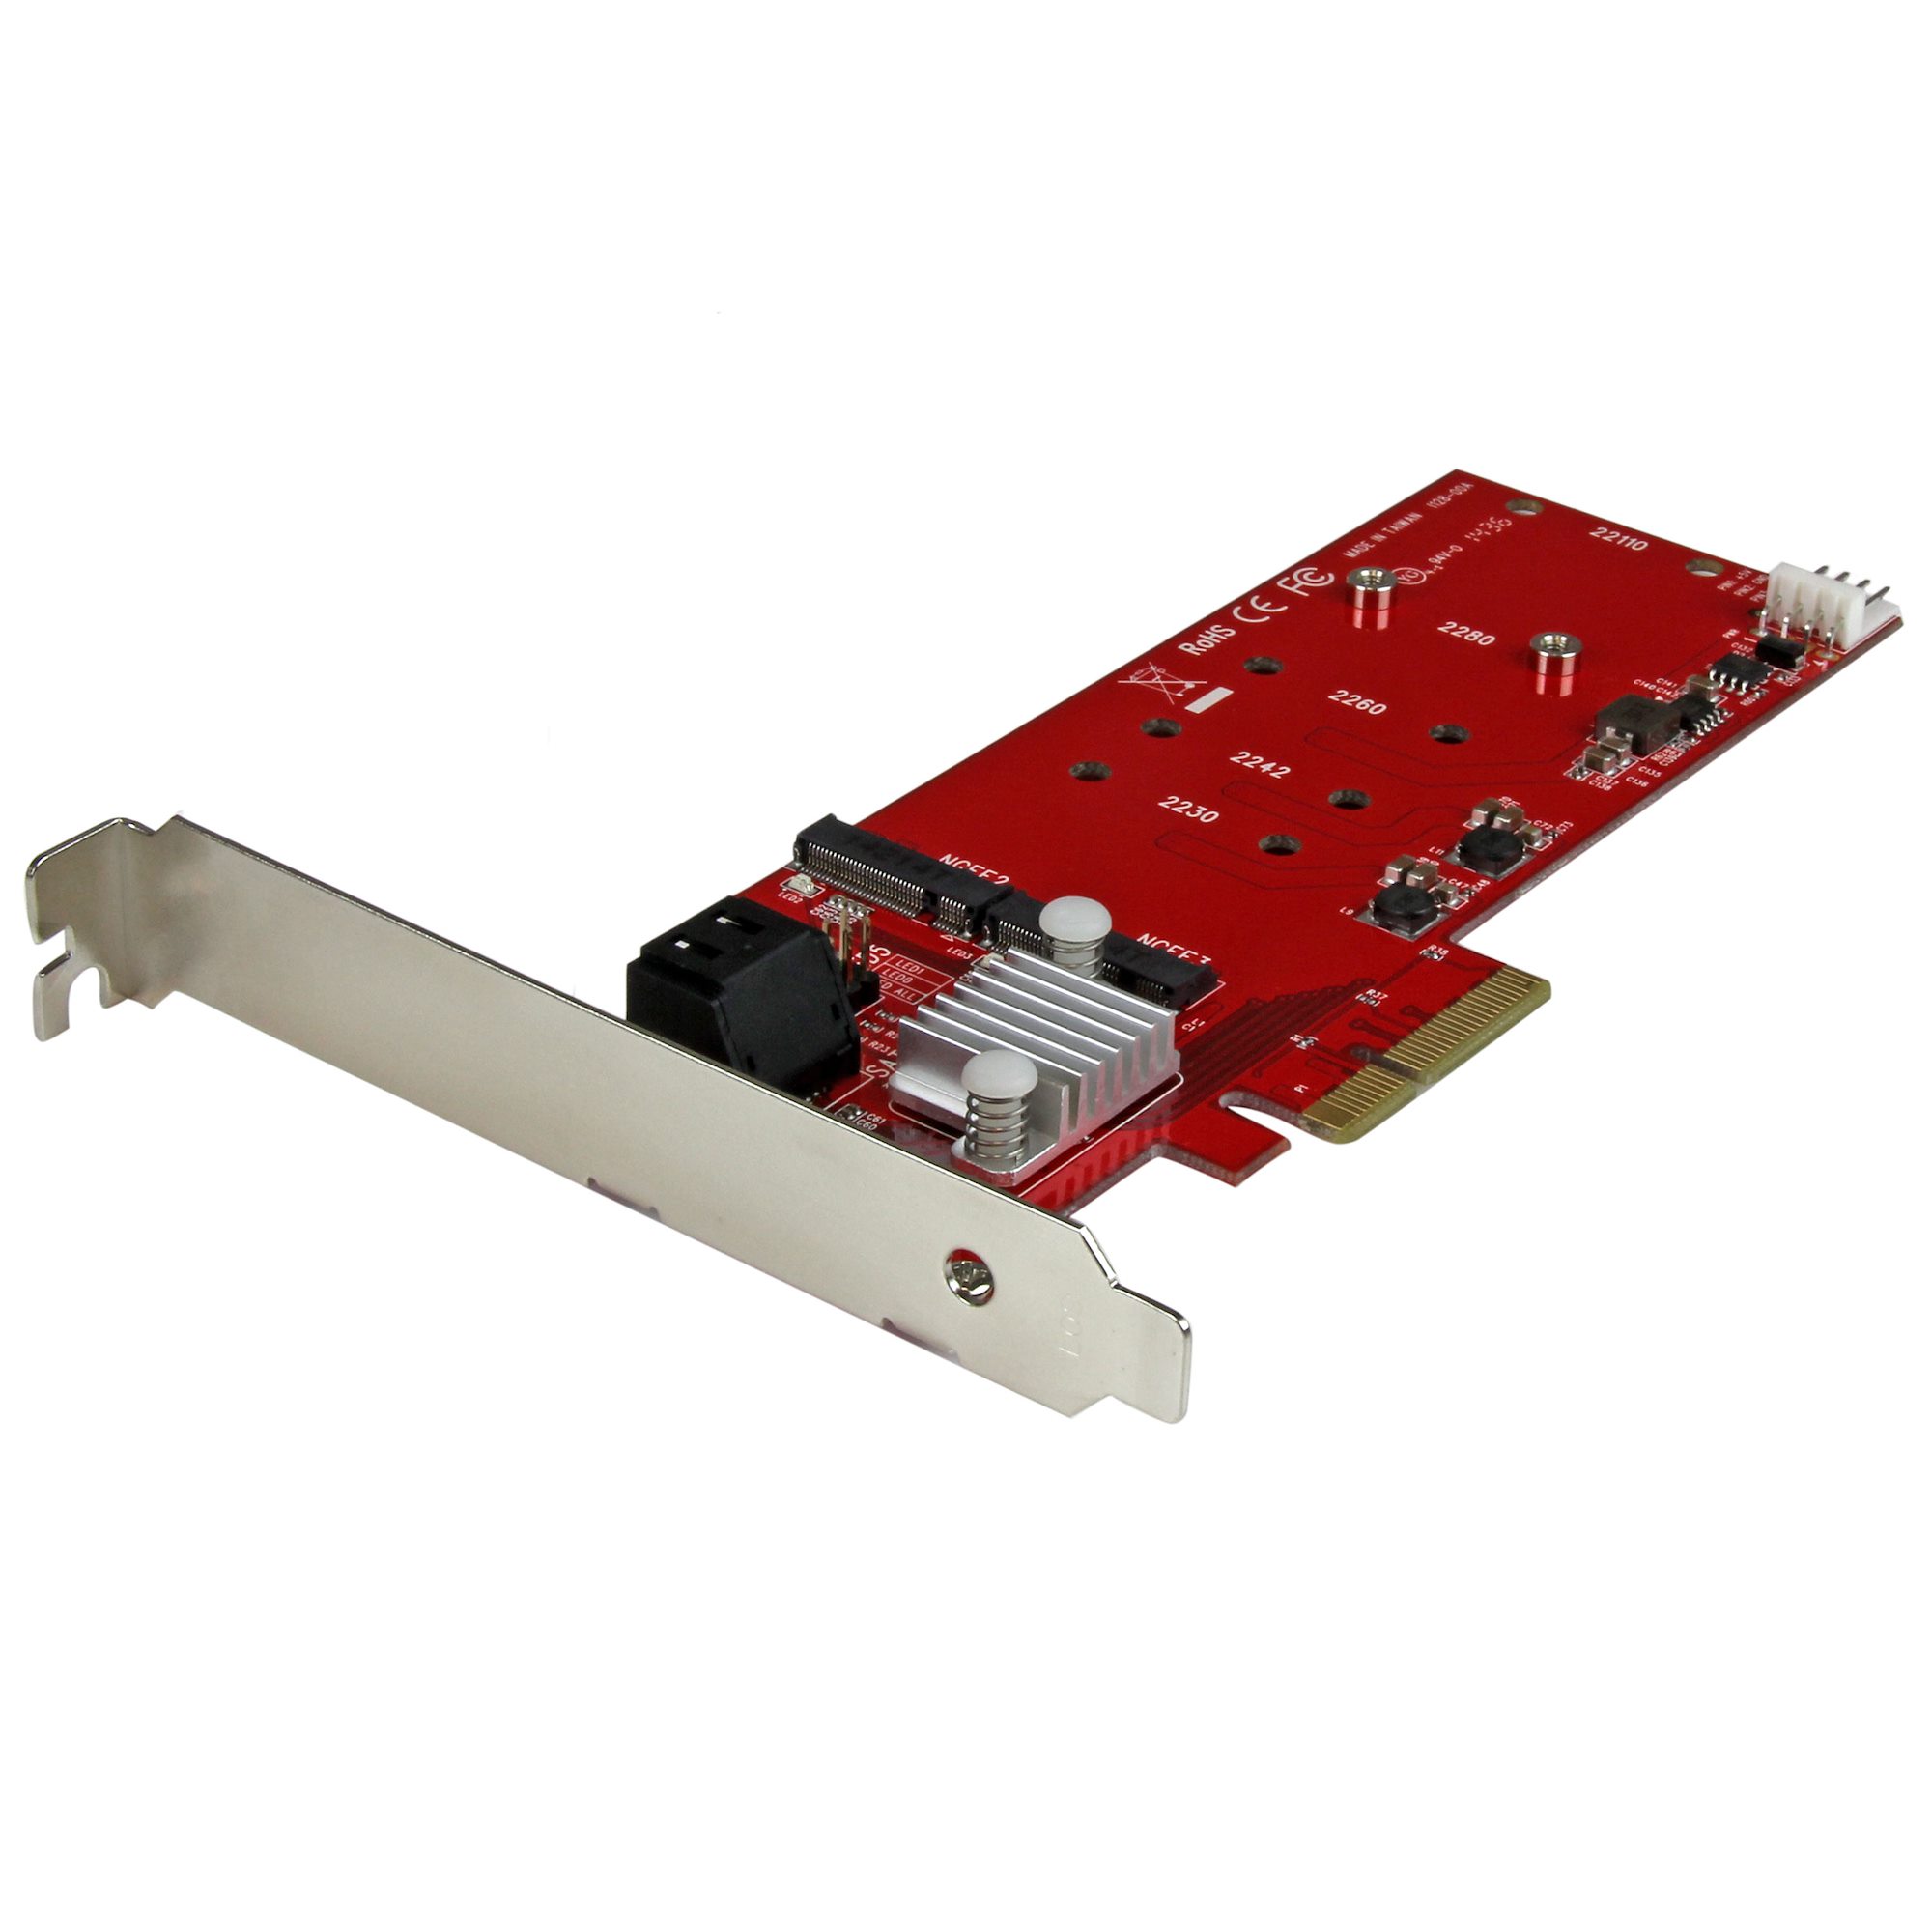 2x M.2 SSD RAIDコントローラカード SATA 3.0 2ポート搭載 PCI Express接続